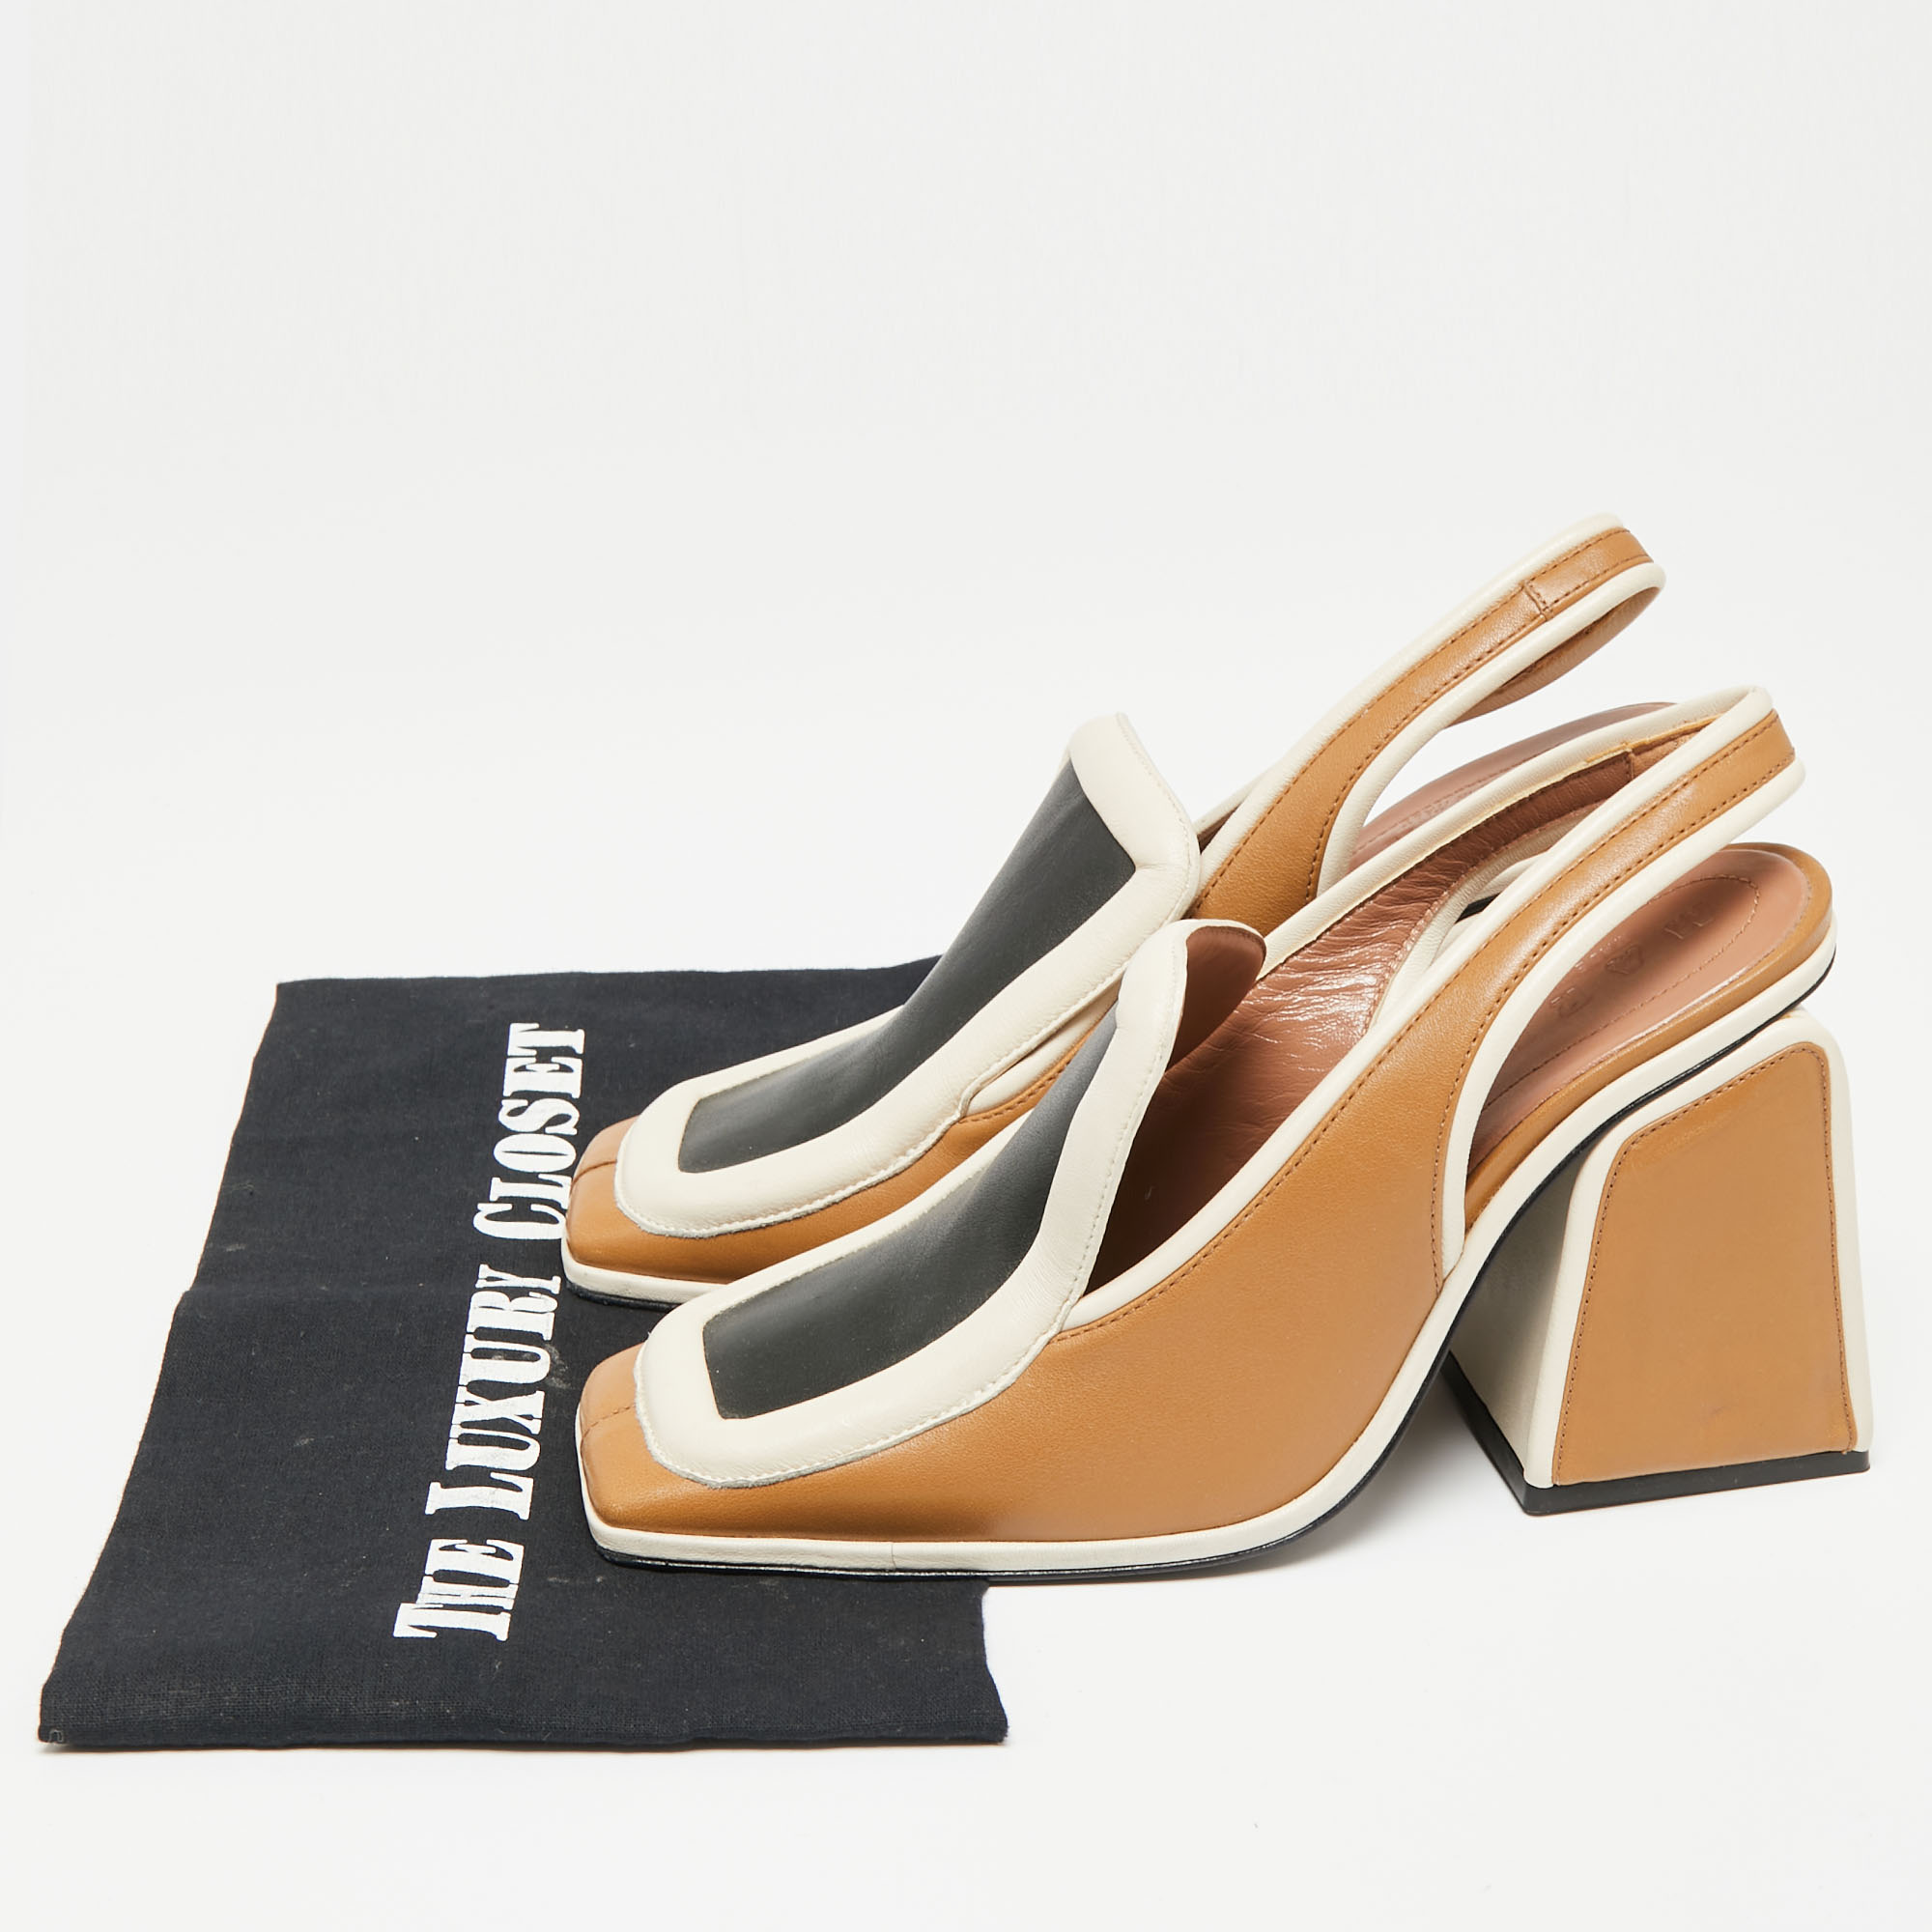 Marni Tri-Color Leather Square Toe Block Heel Slingback Sandals Size 37